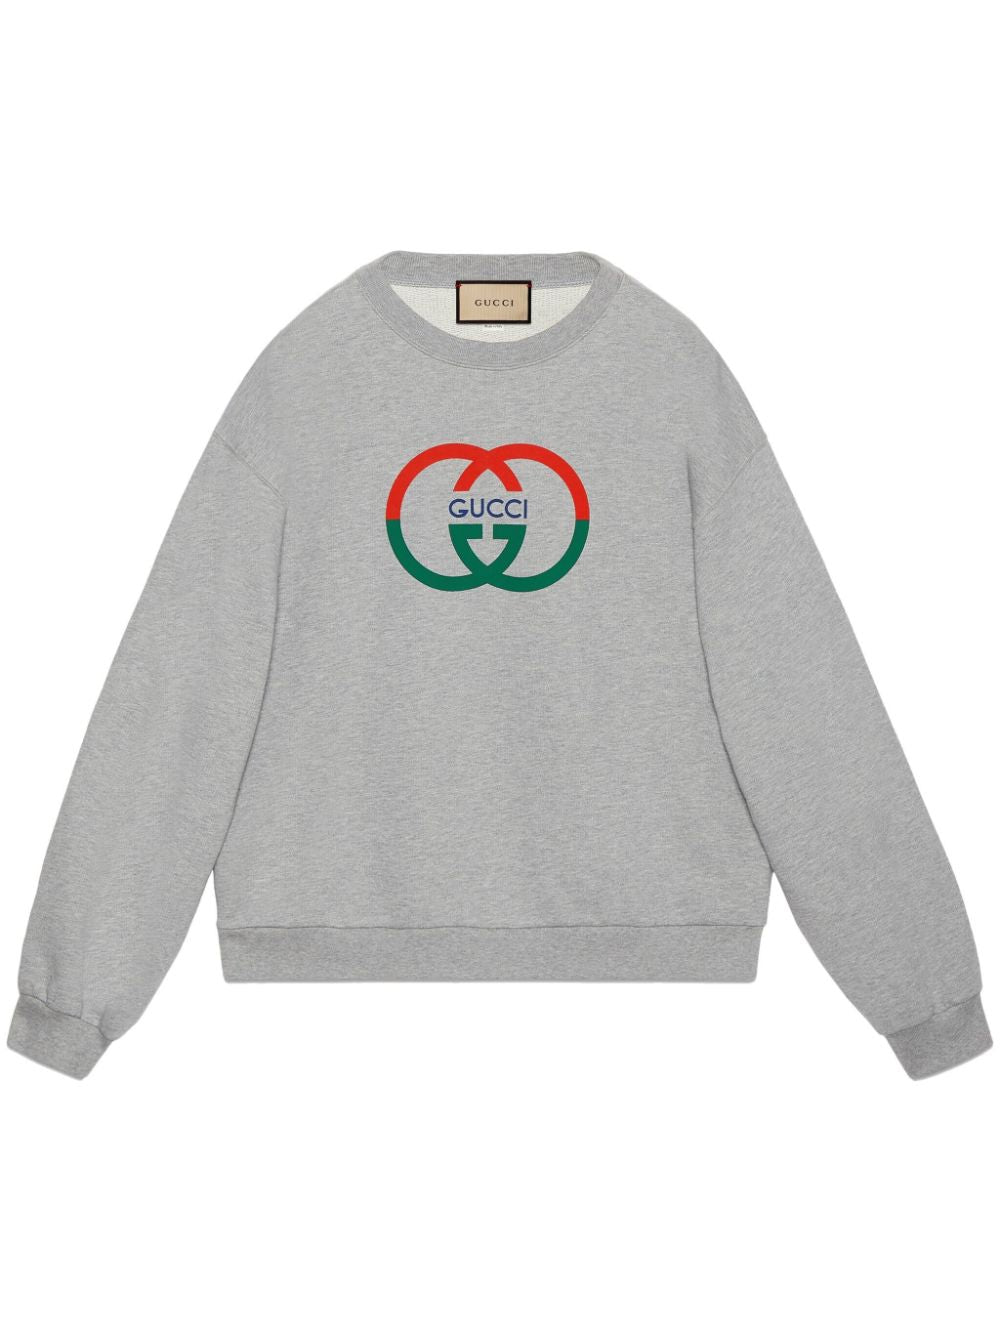 Shop Gucci Men's Grey Cotton Crewneck Sweatshirt With Interlocking G Logo Print